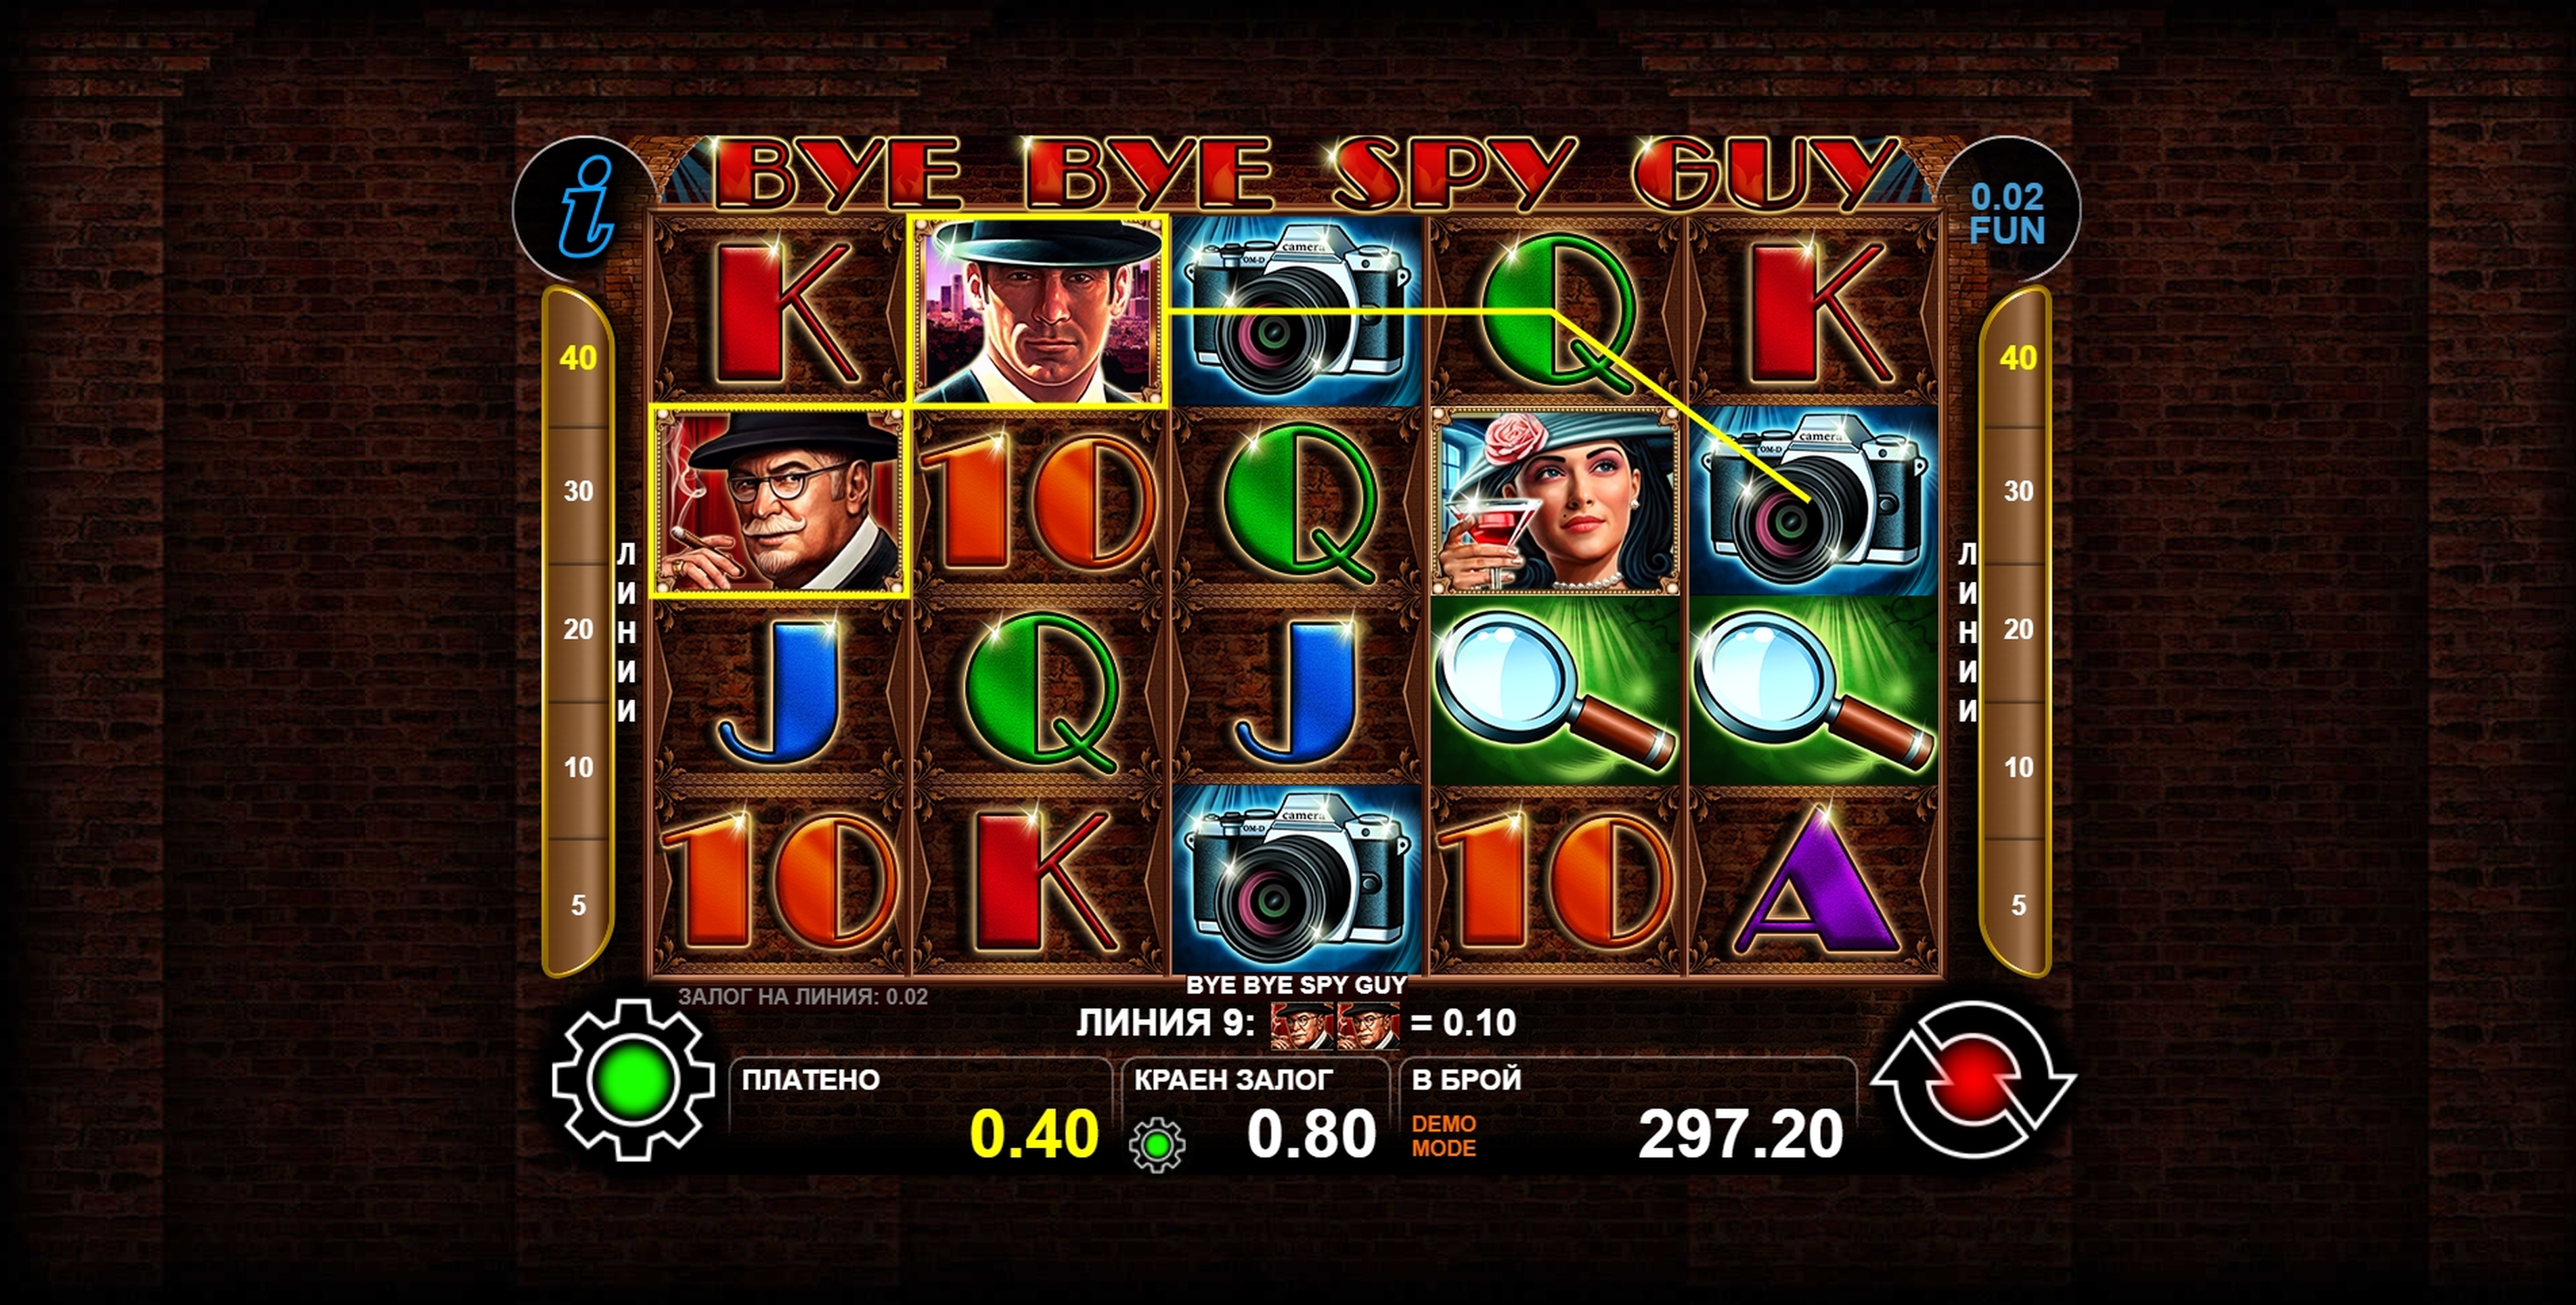 Win Money in Bye Bye Spy Guy Free Slot Game by casino technology